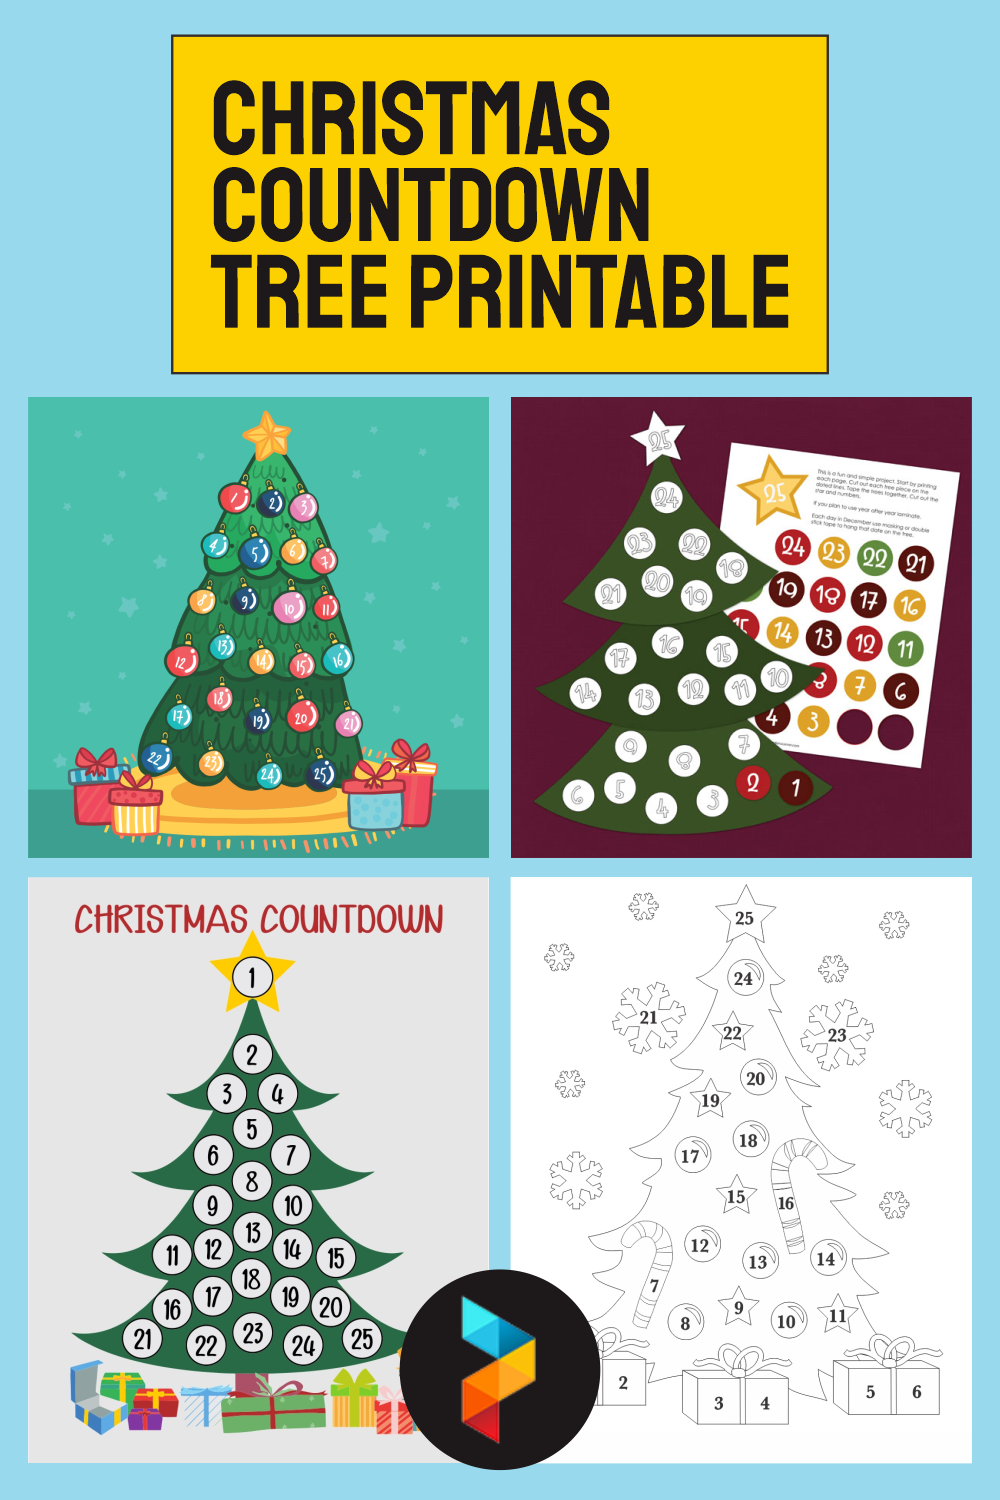 6 Best Christmas Countdown Tree Printable